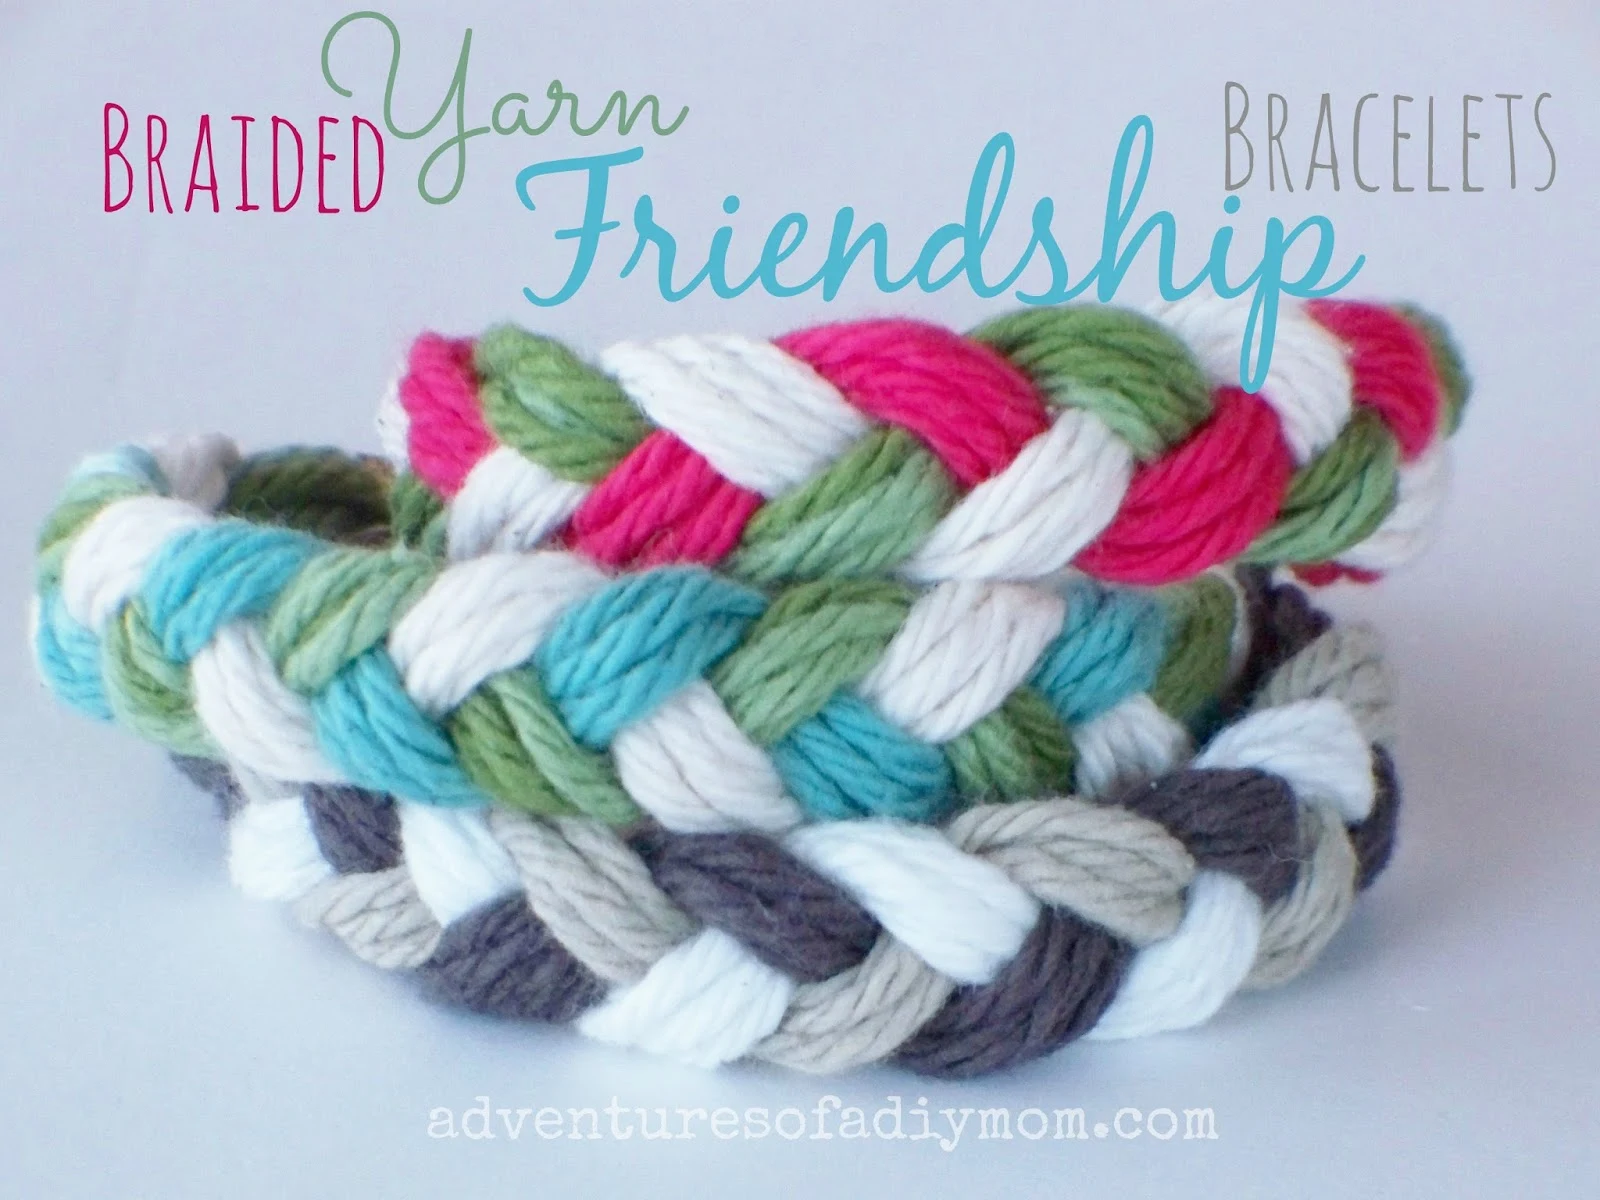 Fabric braided bracelet tutorial - 4 strand braid with fabric scraps